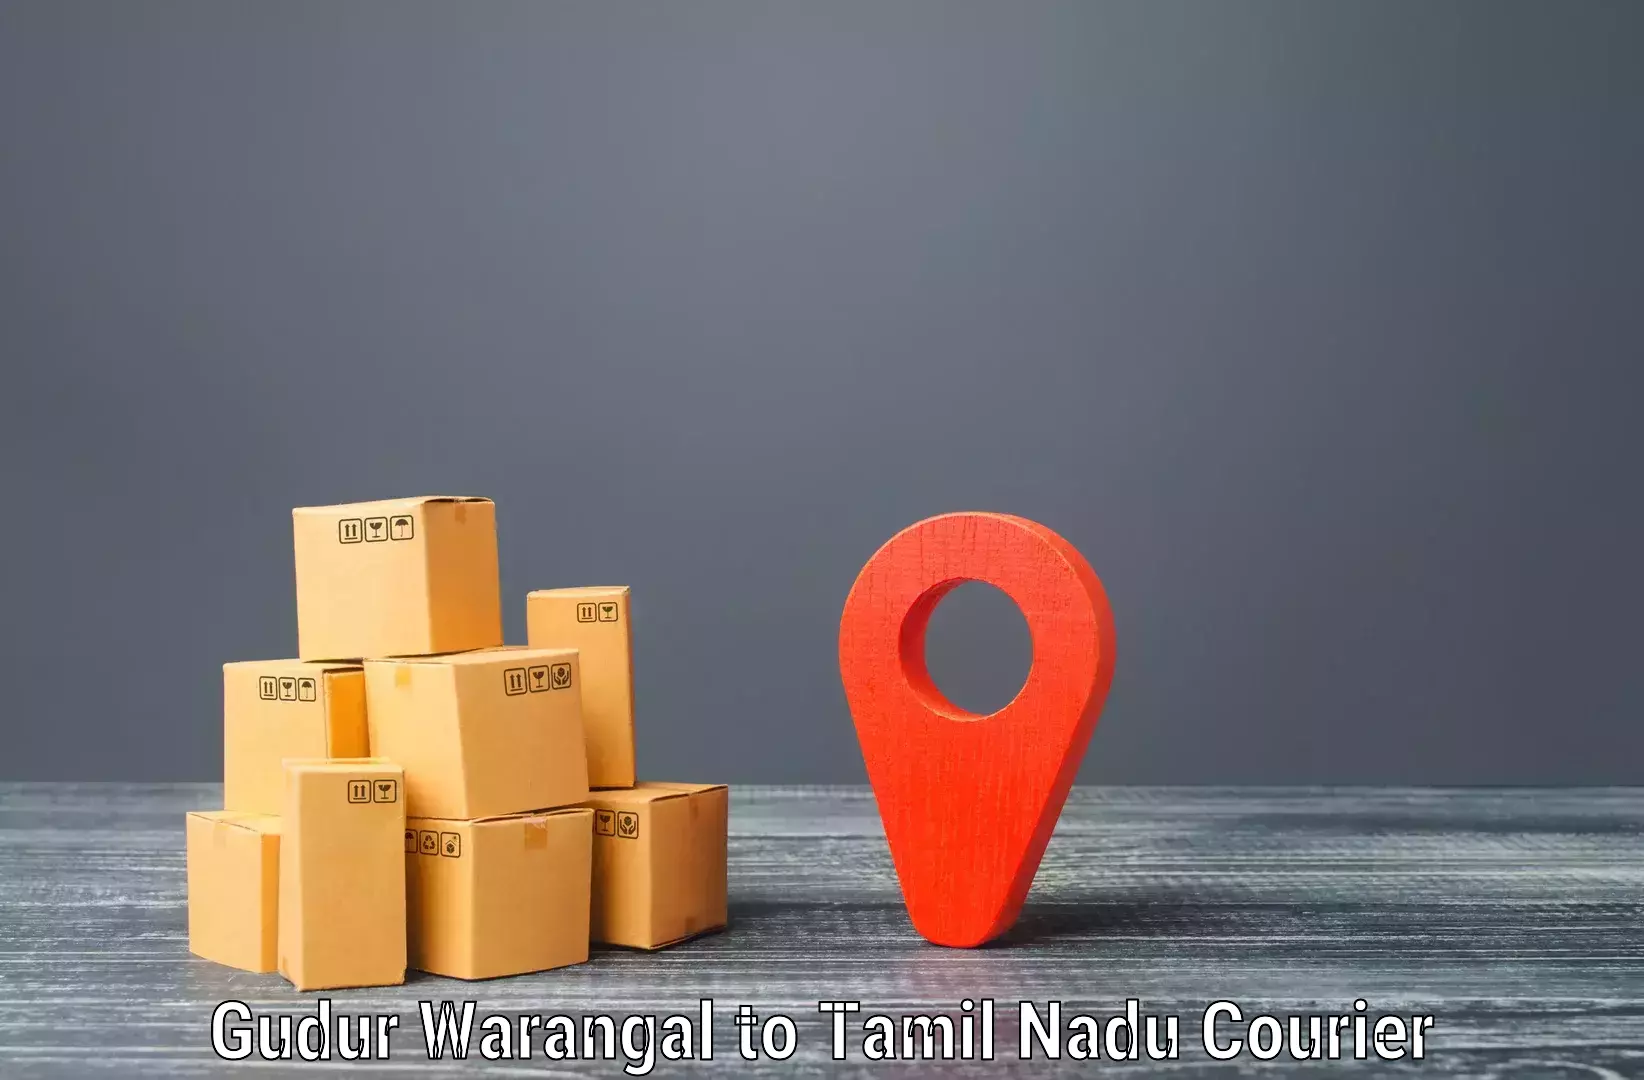 Reliable freight solutions Gudur Warangal to Nandambakkam